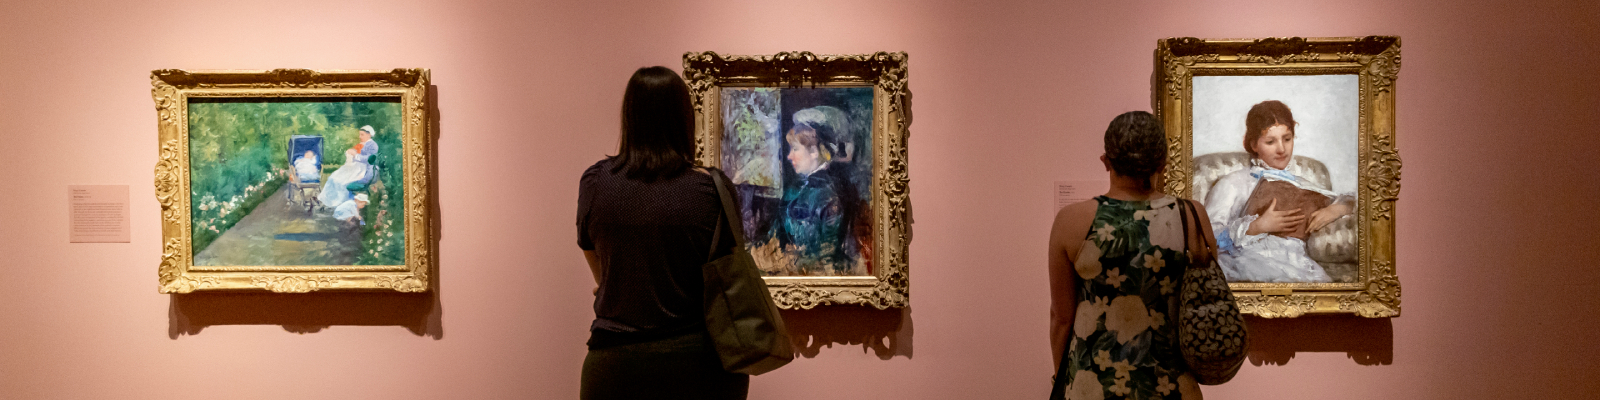 Whistler to Cassatt Exhibition banner